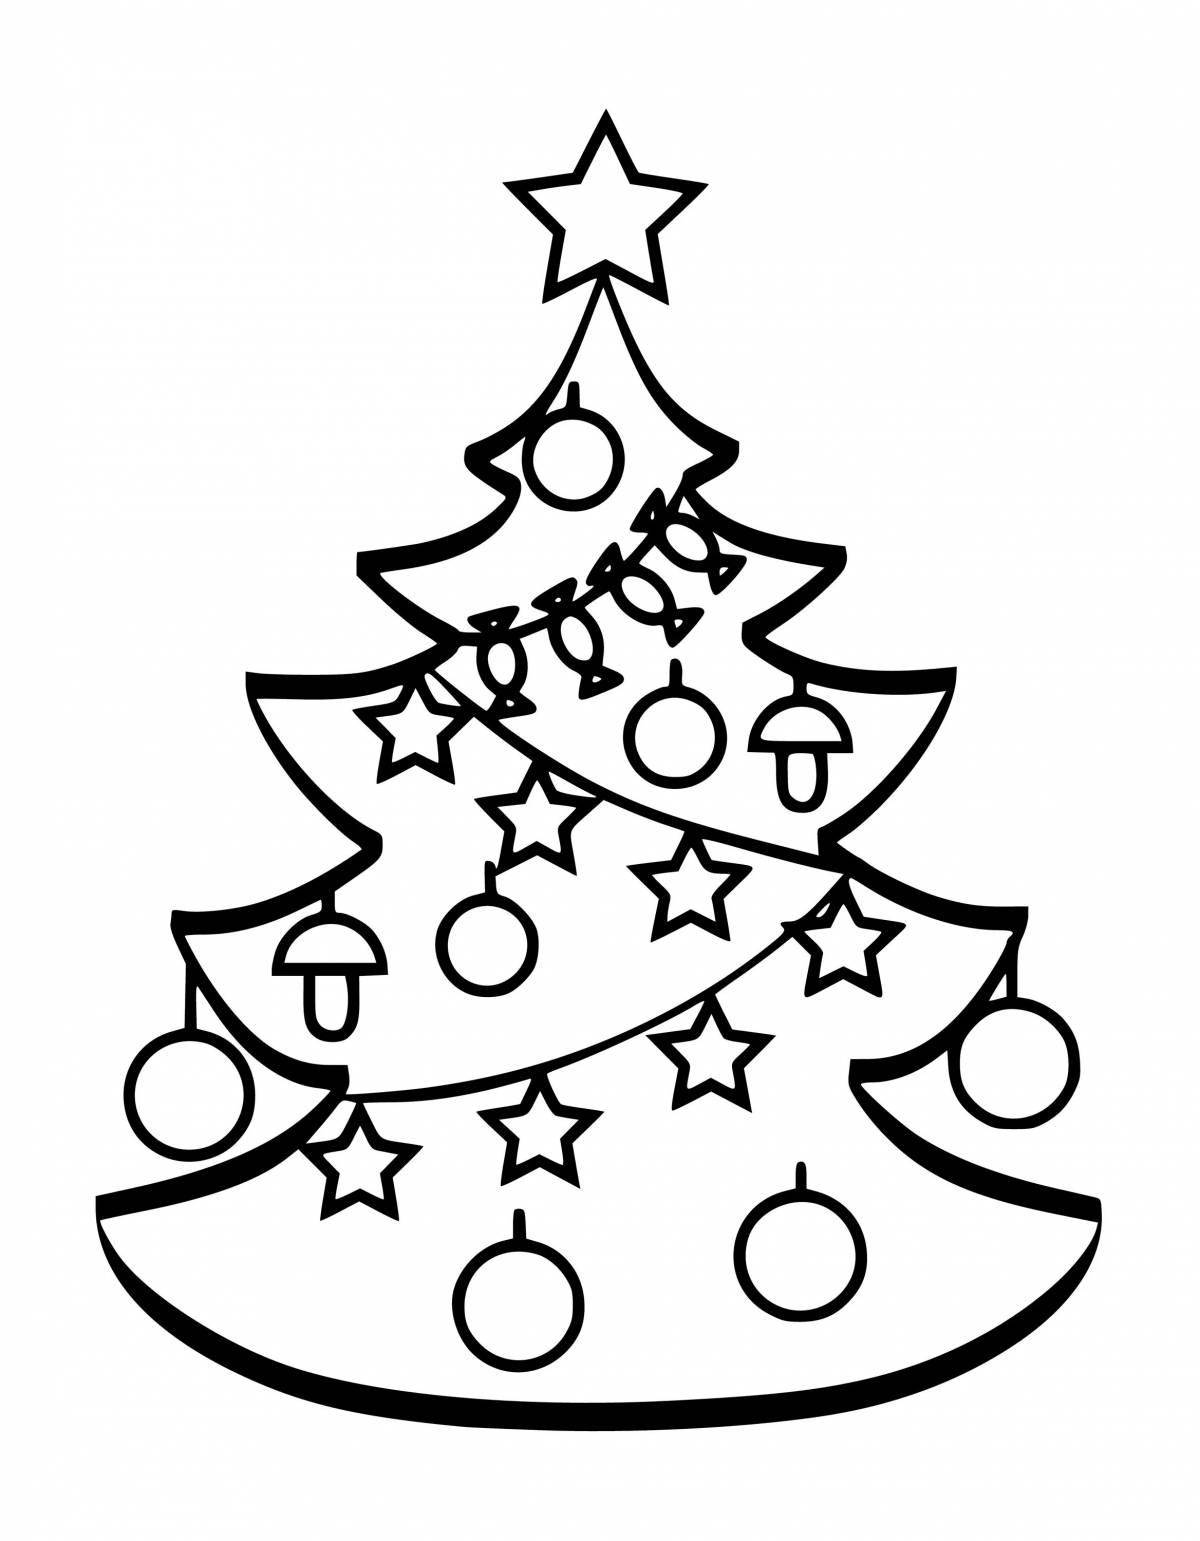 Joyful drawing of a christmas tree